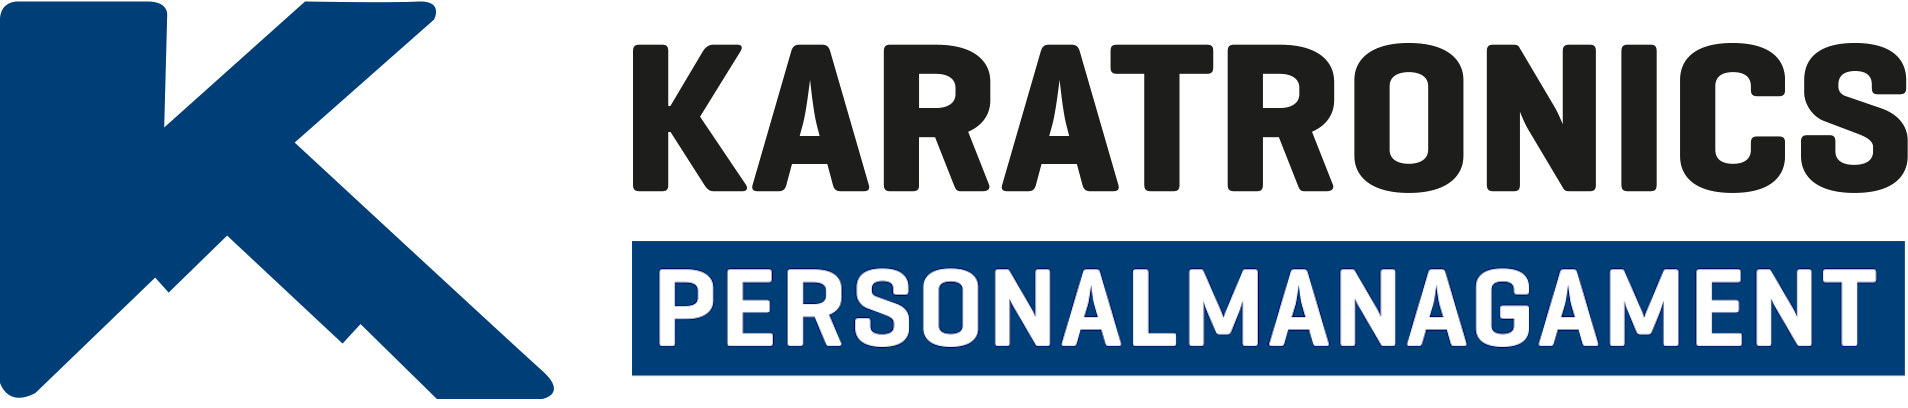 Karatronics GmbH – Personalmanagement in Frankfurt und Umgebung